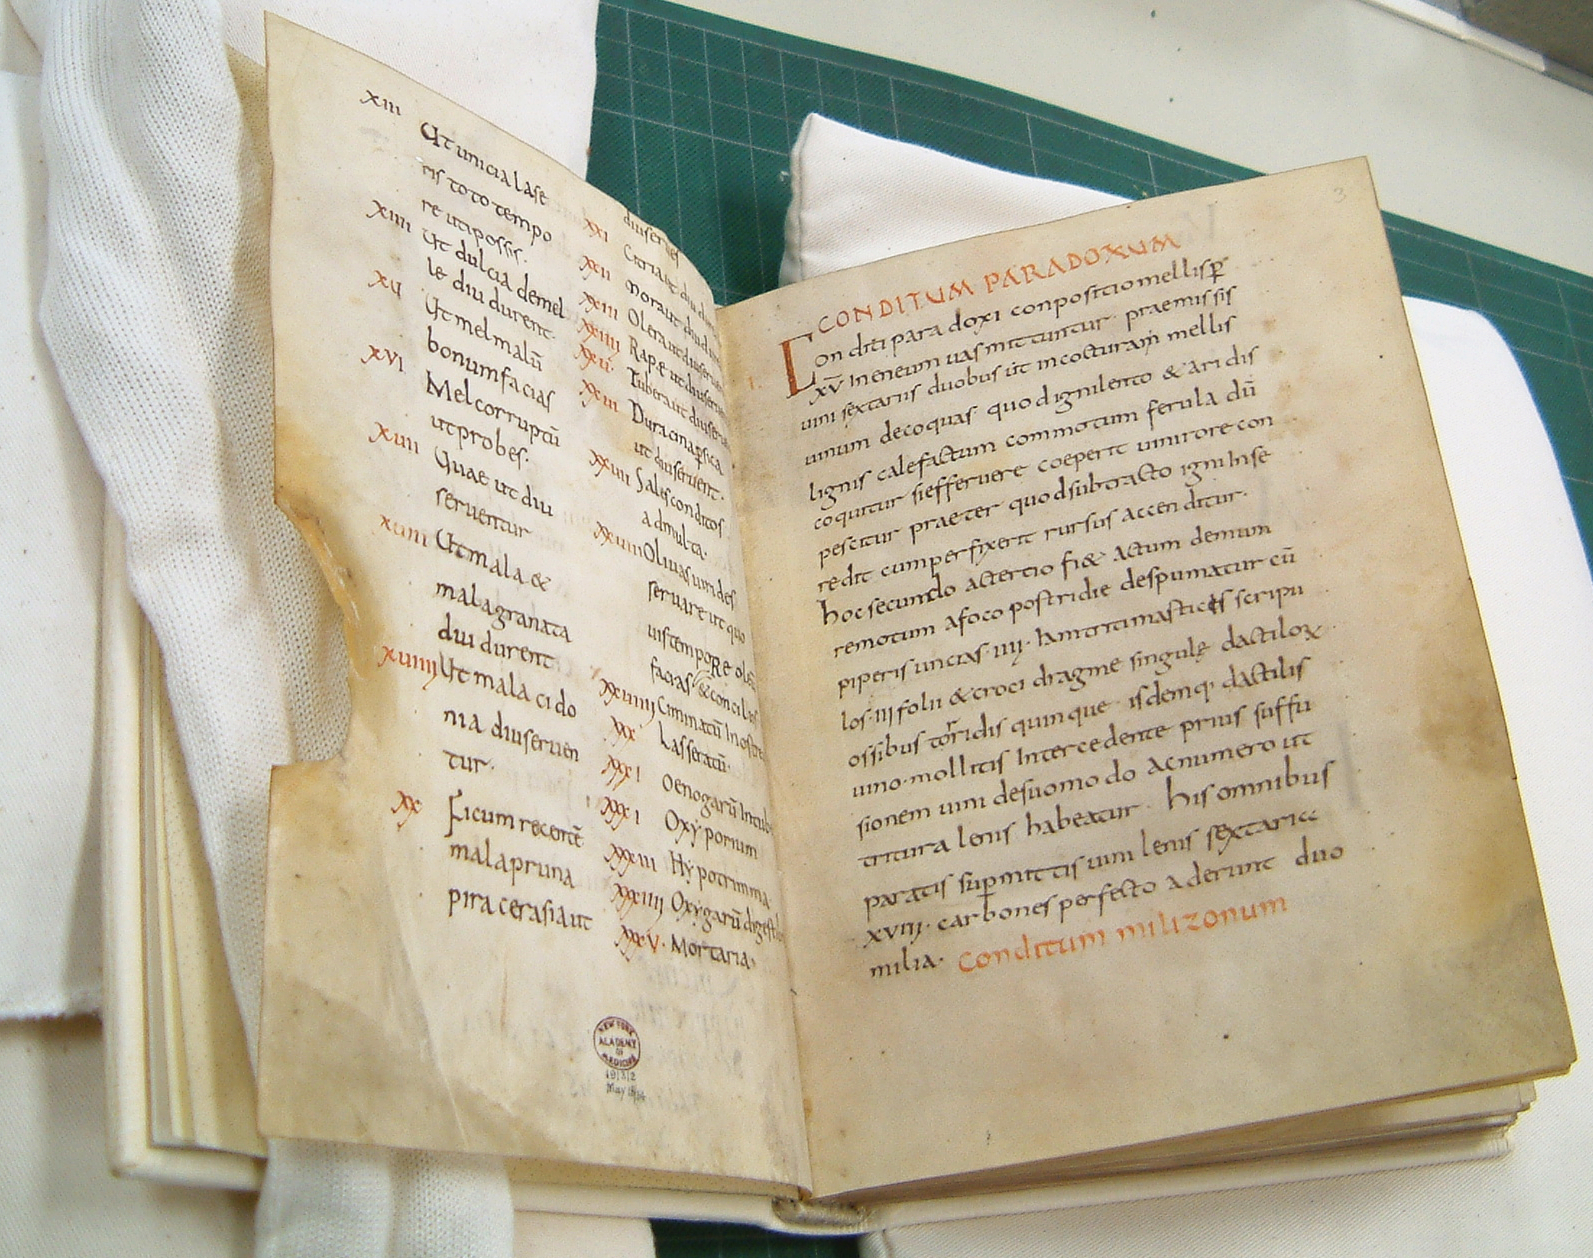 Az Apicius nevű szerzőnek tulajdonított mű, a De re culinaria vagy De re coquinaria kézirata i. sz. 900-ból